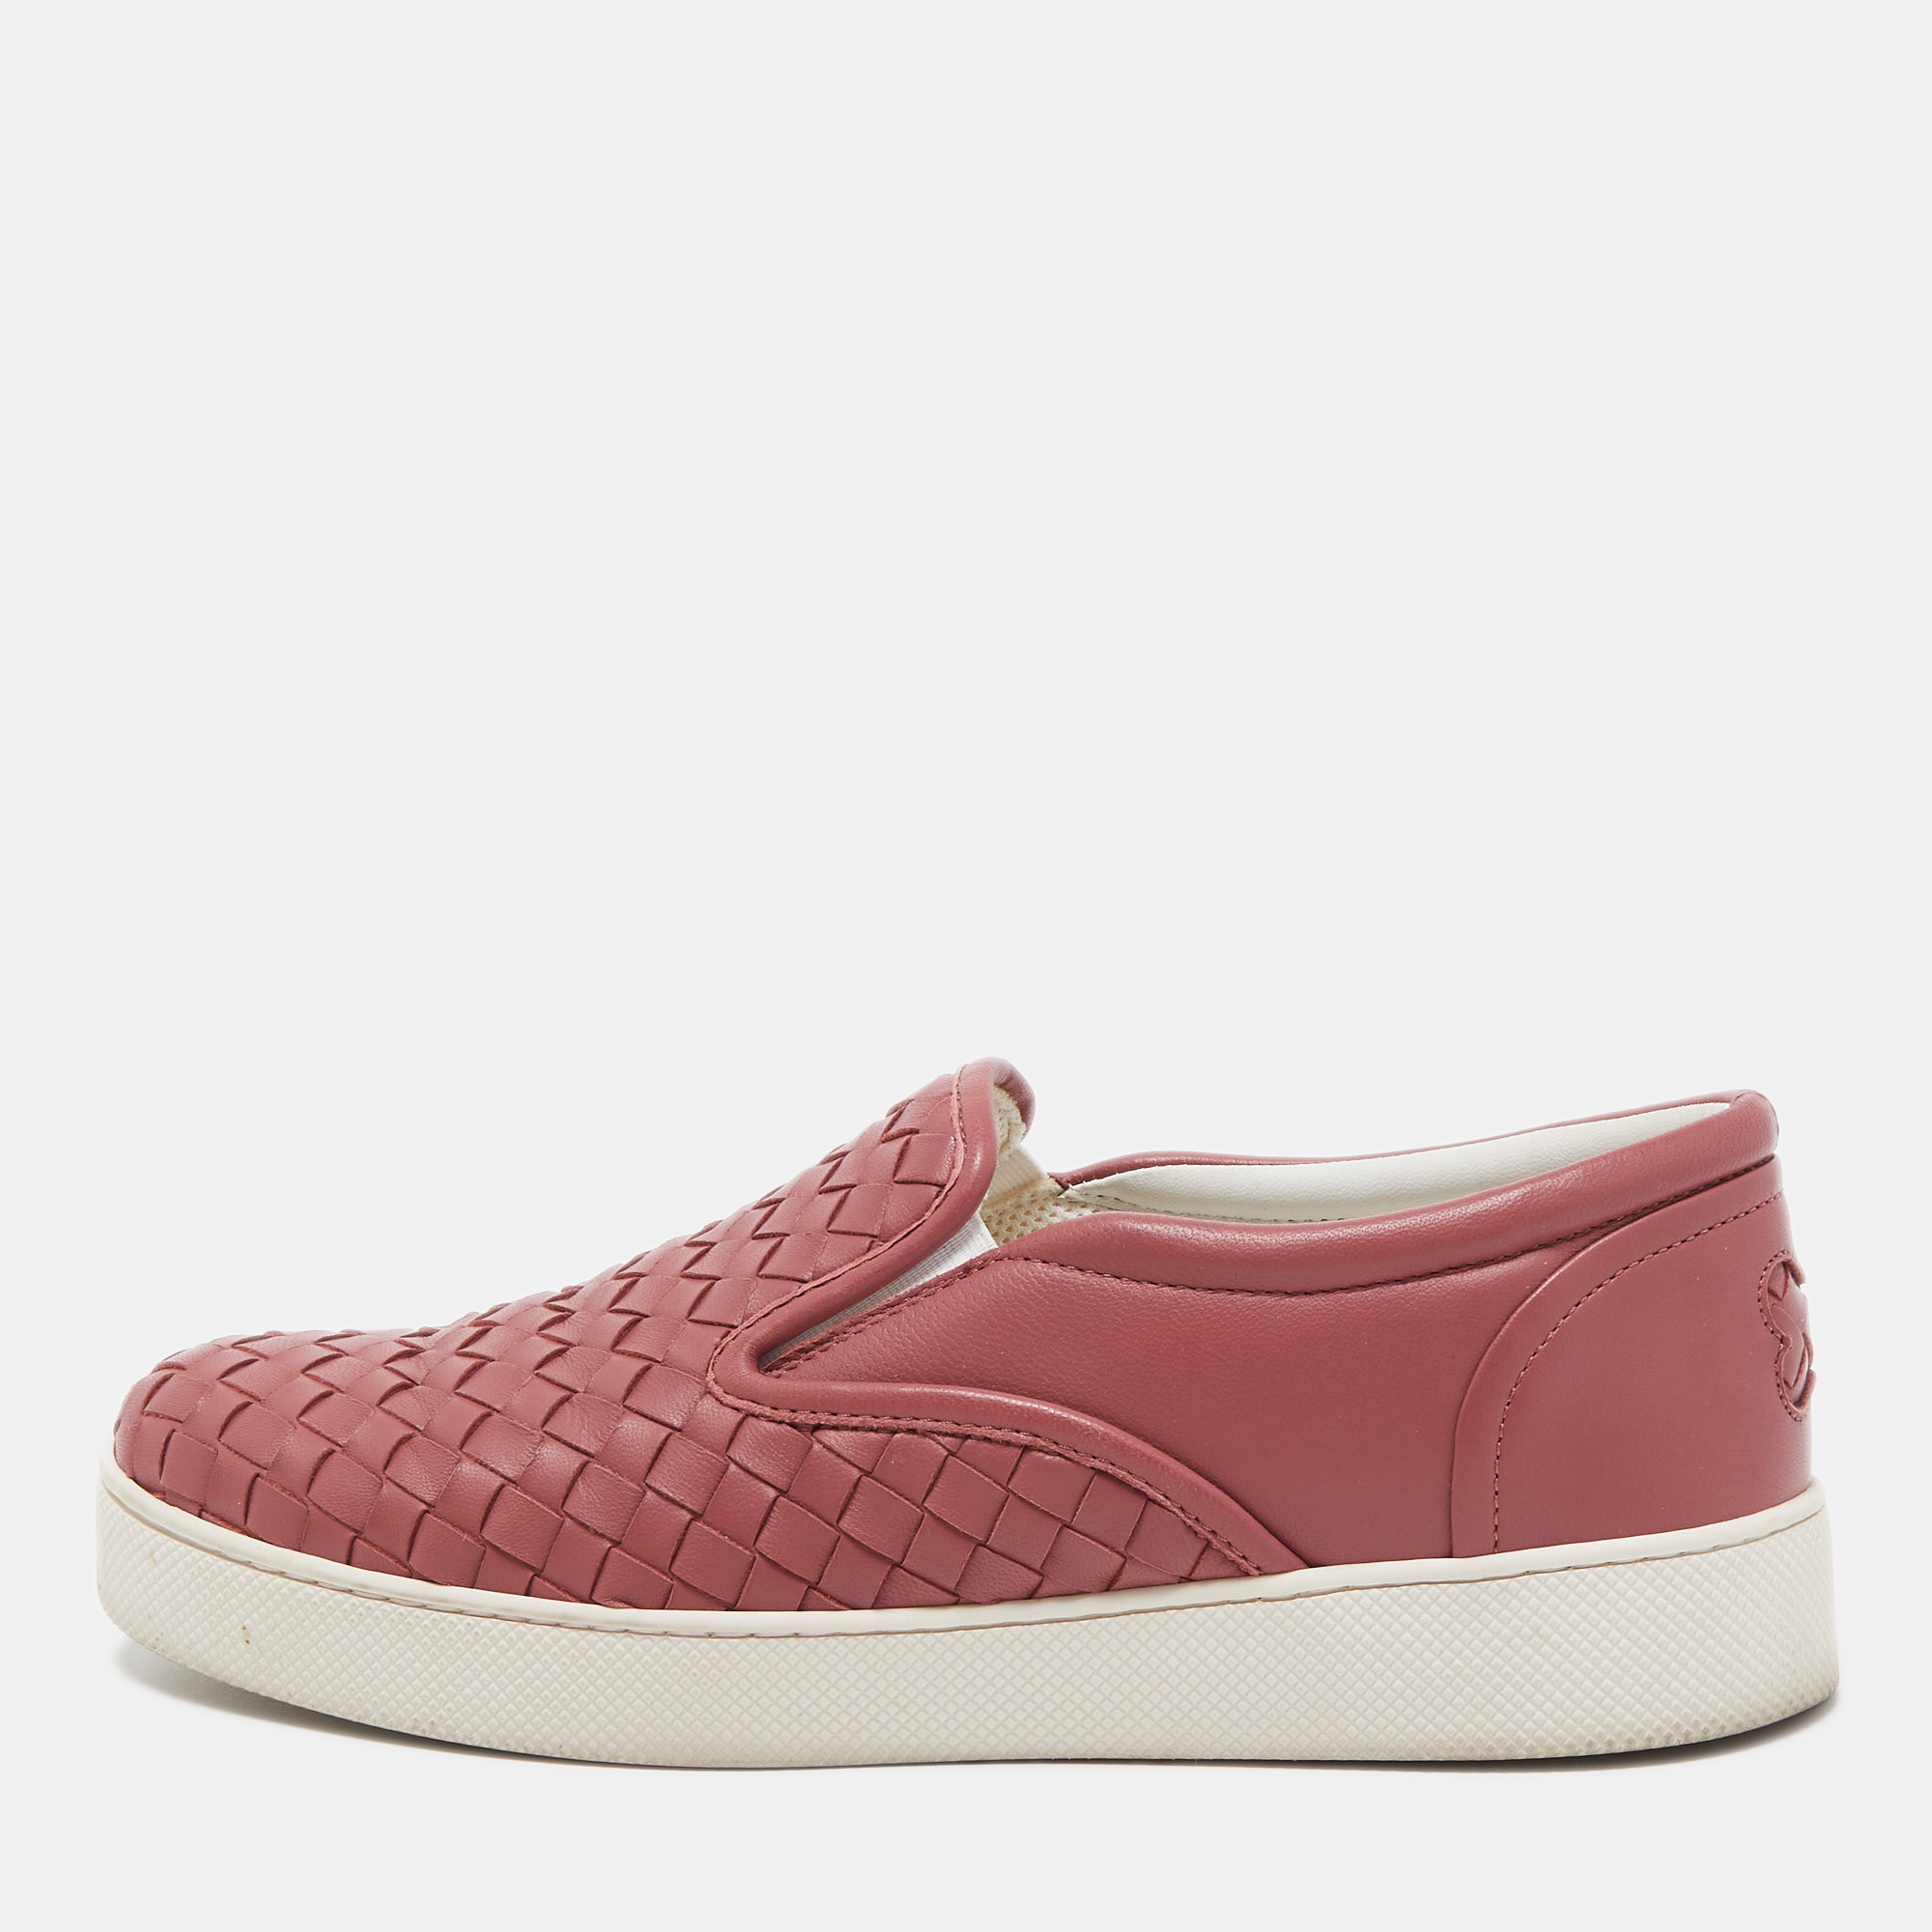 Bottega veneta pink intrecciato leather slip on sneakers size 38